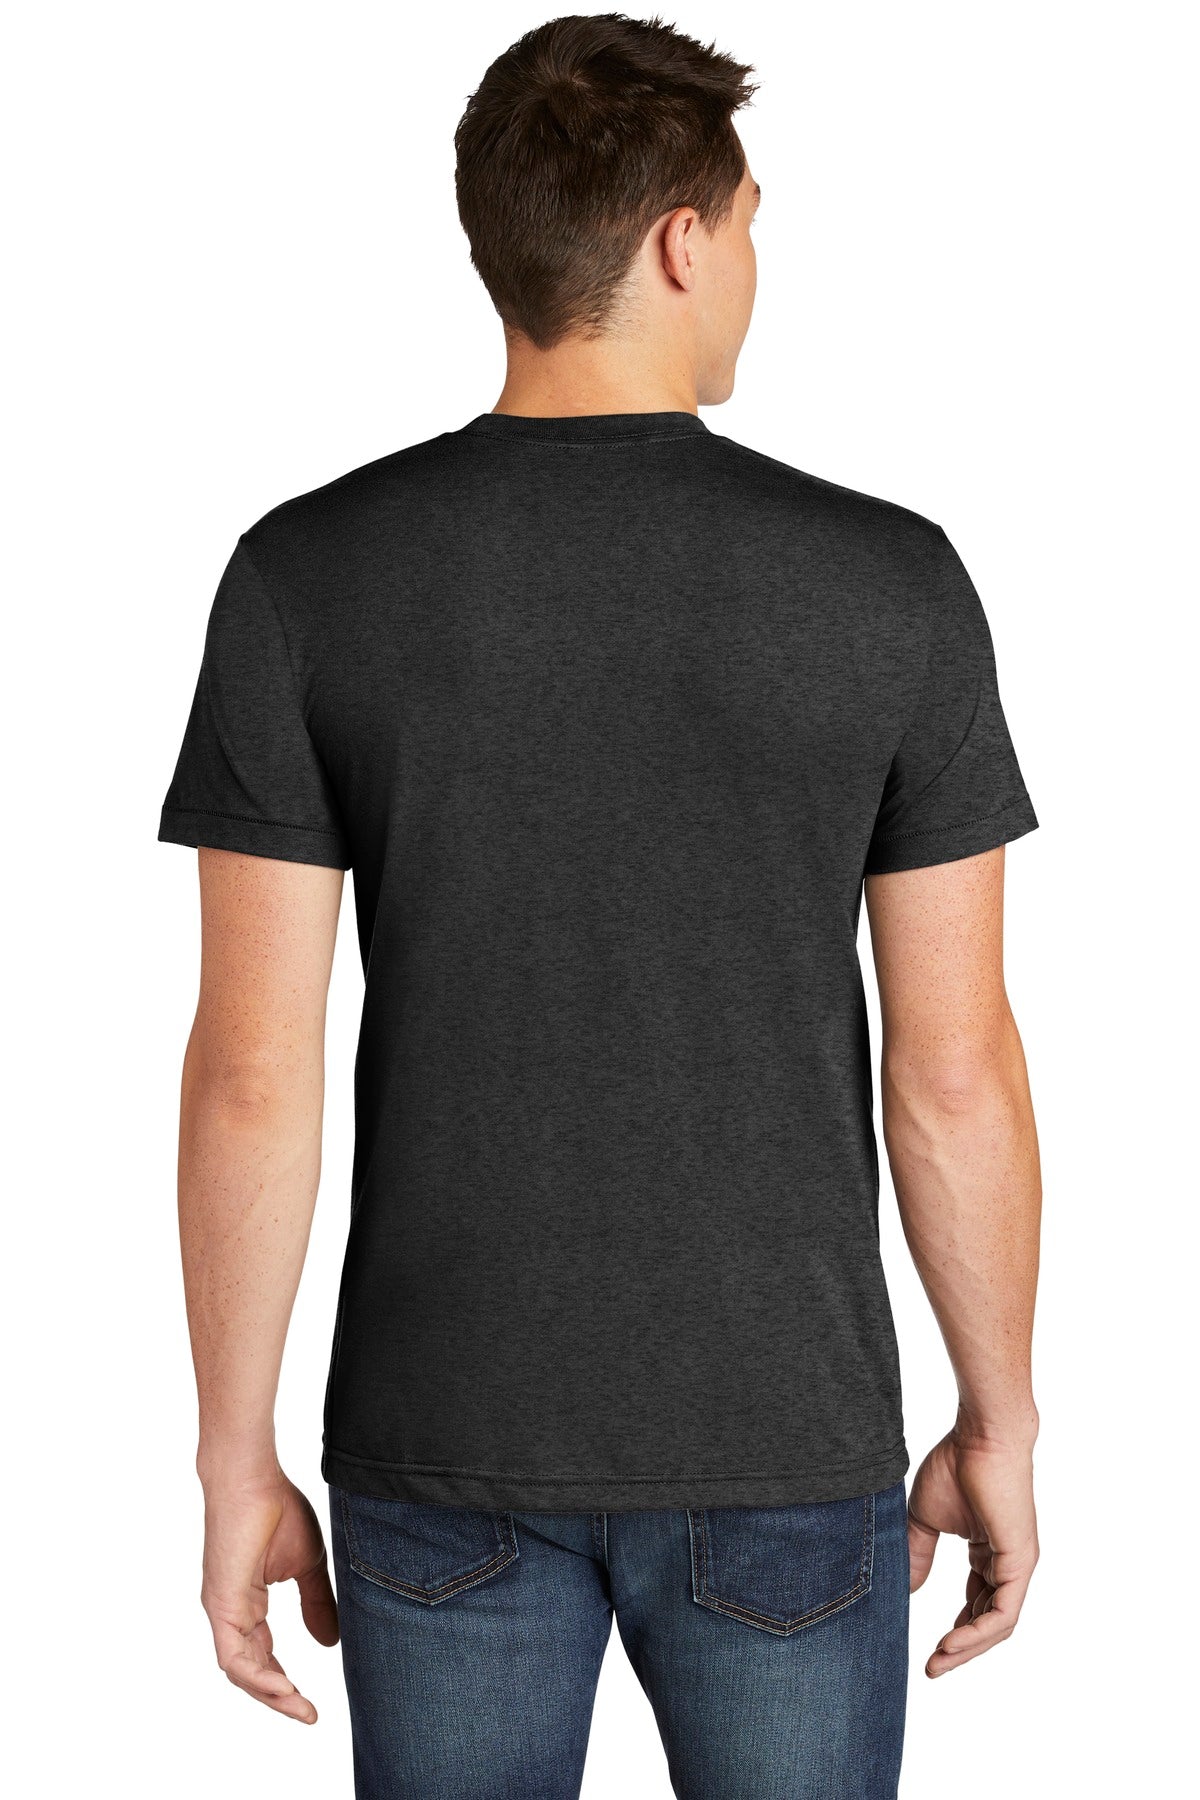 American Apparel ® Poly-Cotton T-Shirt. BB401W [Heather Black] - DFW Impression